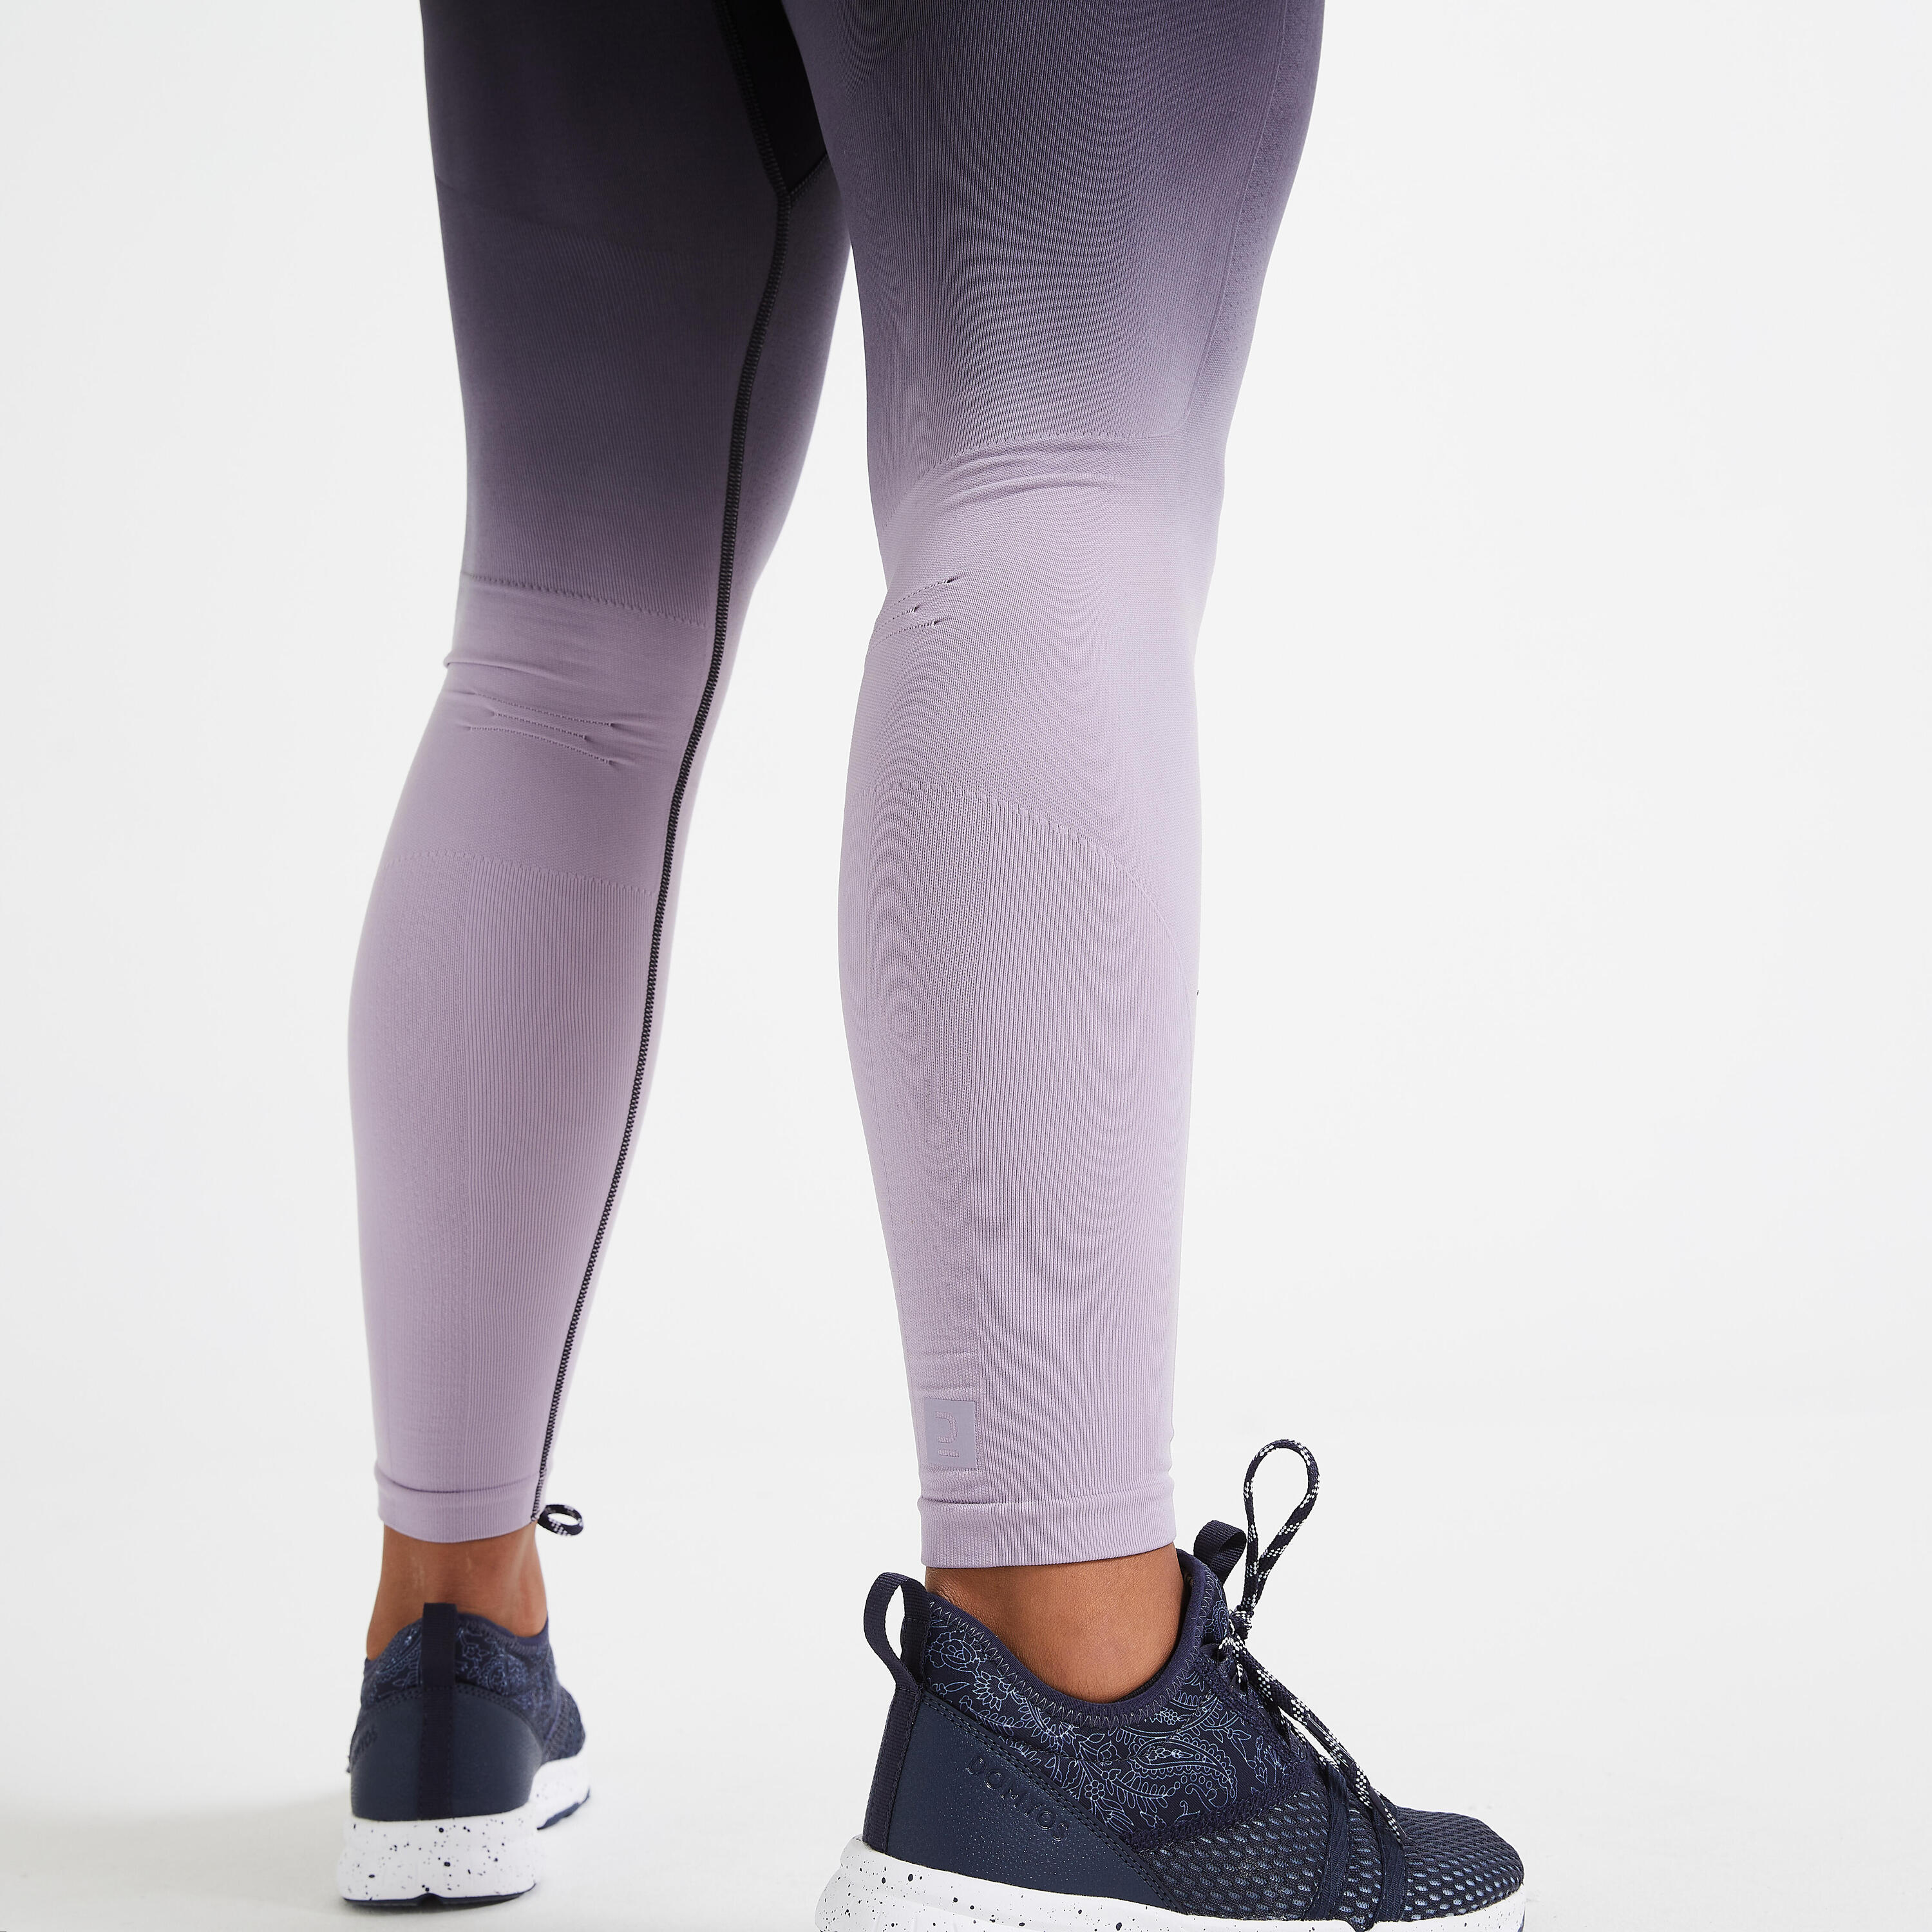 Women's Seamless Cross-Training Leggings - Purple/Black 3/4